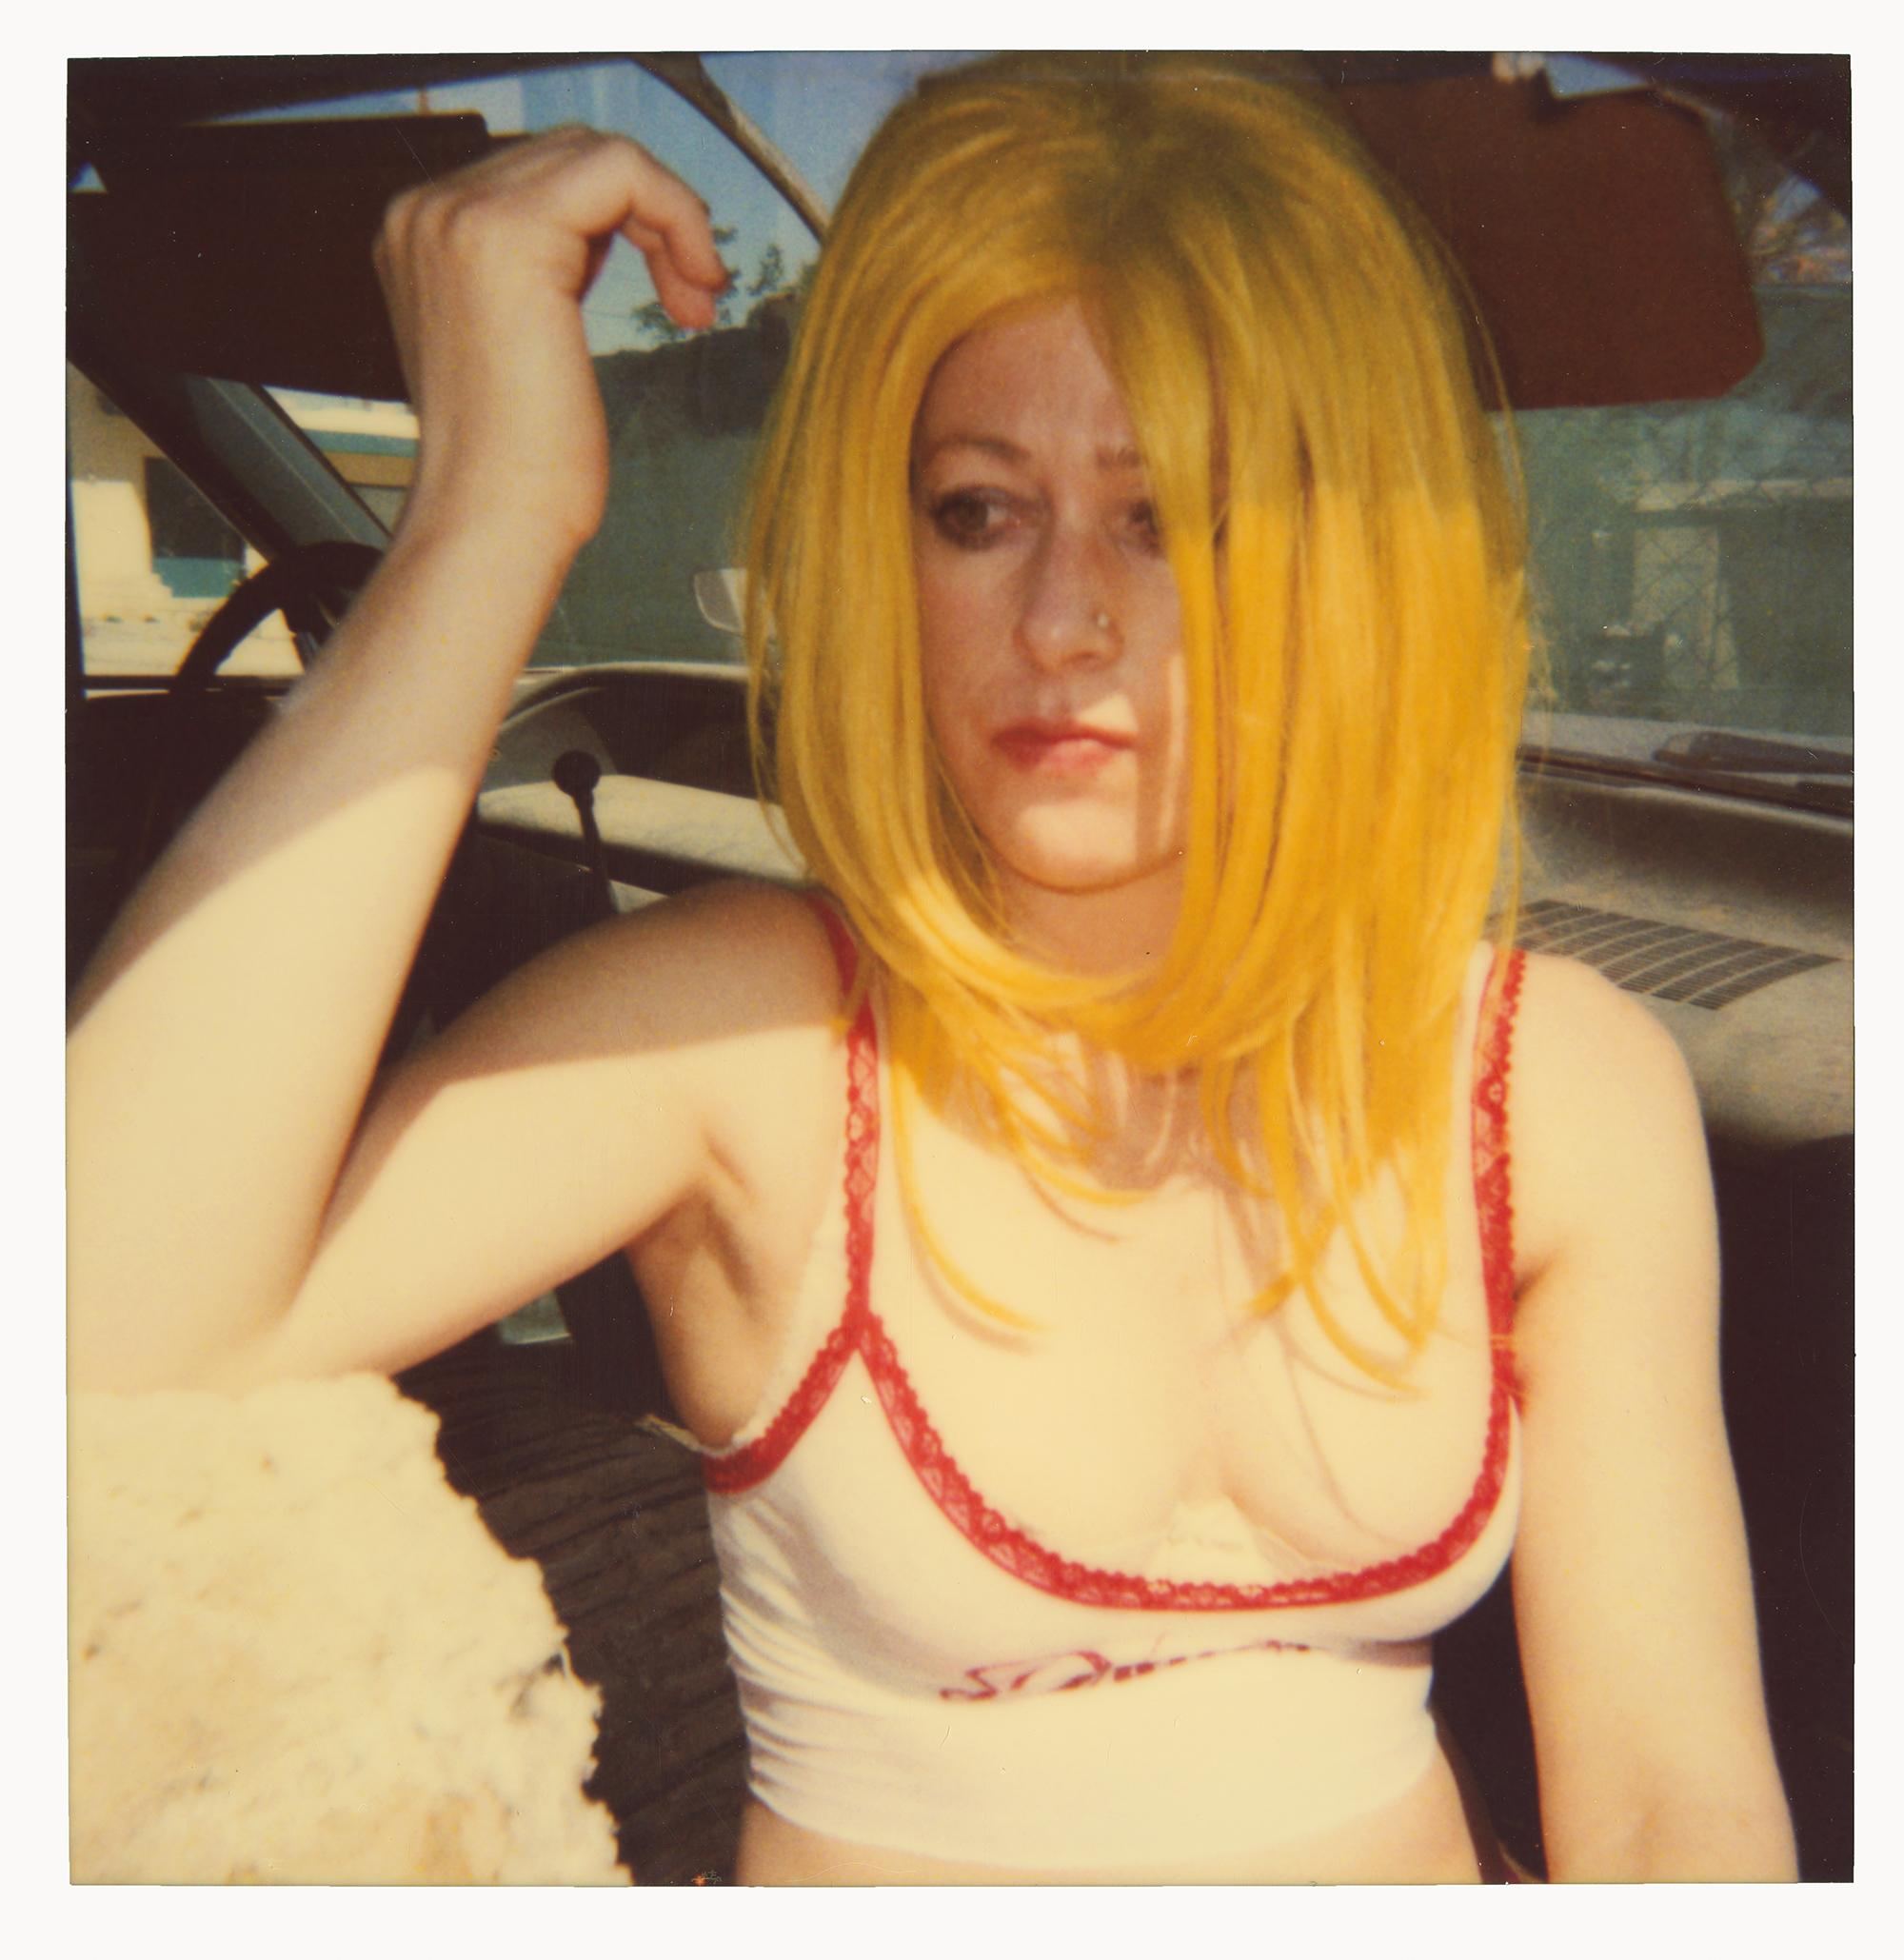 Stefanie Schneider Portrait Photograph - Max, smoking in Car (29 Palms, CA) - 58x56cm, analog, Polaroid, Contemporary